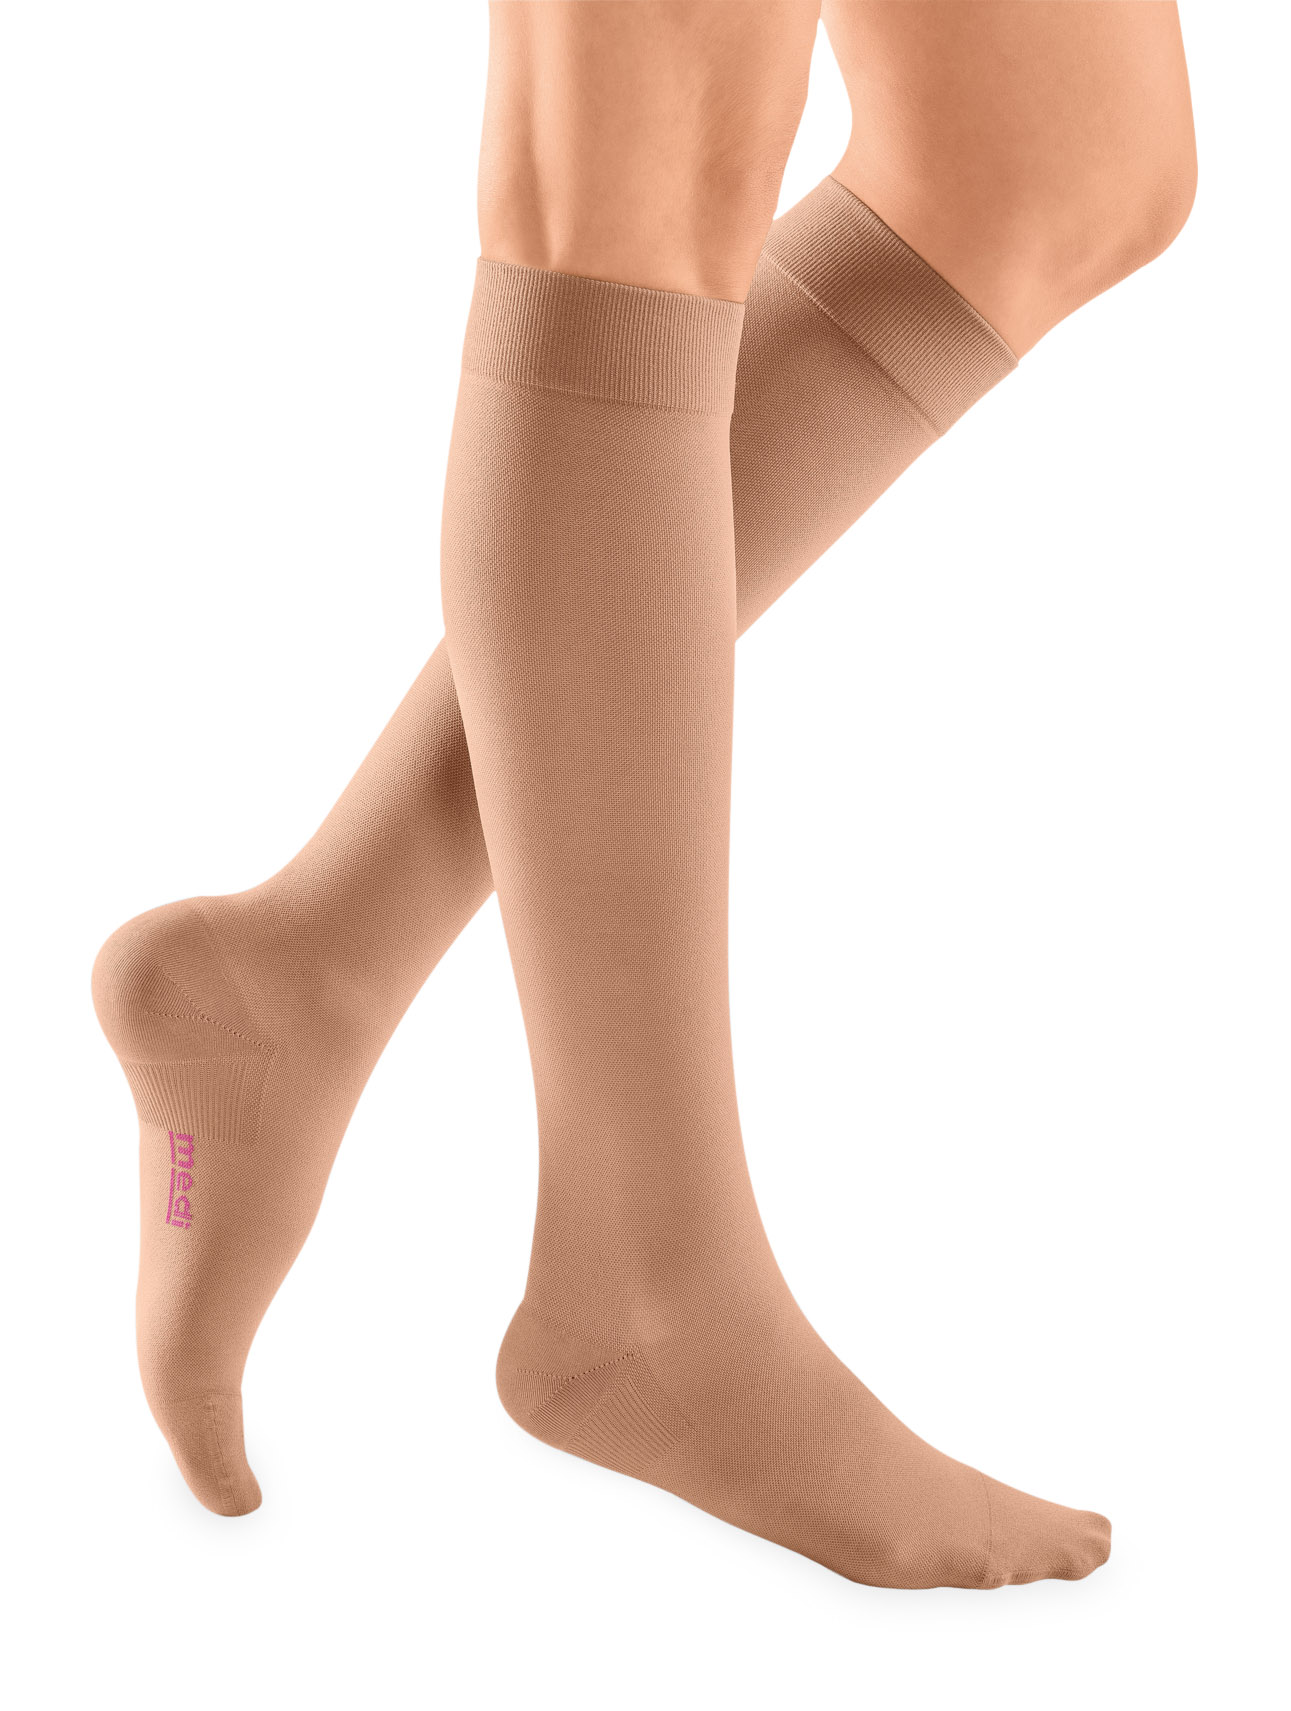 Knee Compression Socks